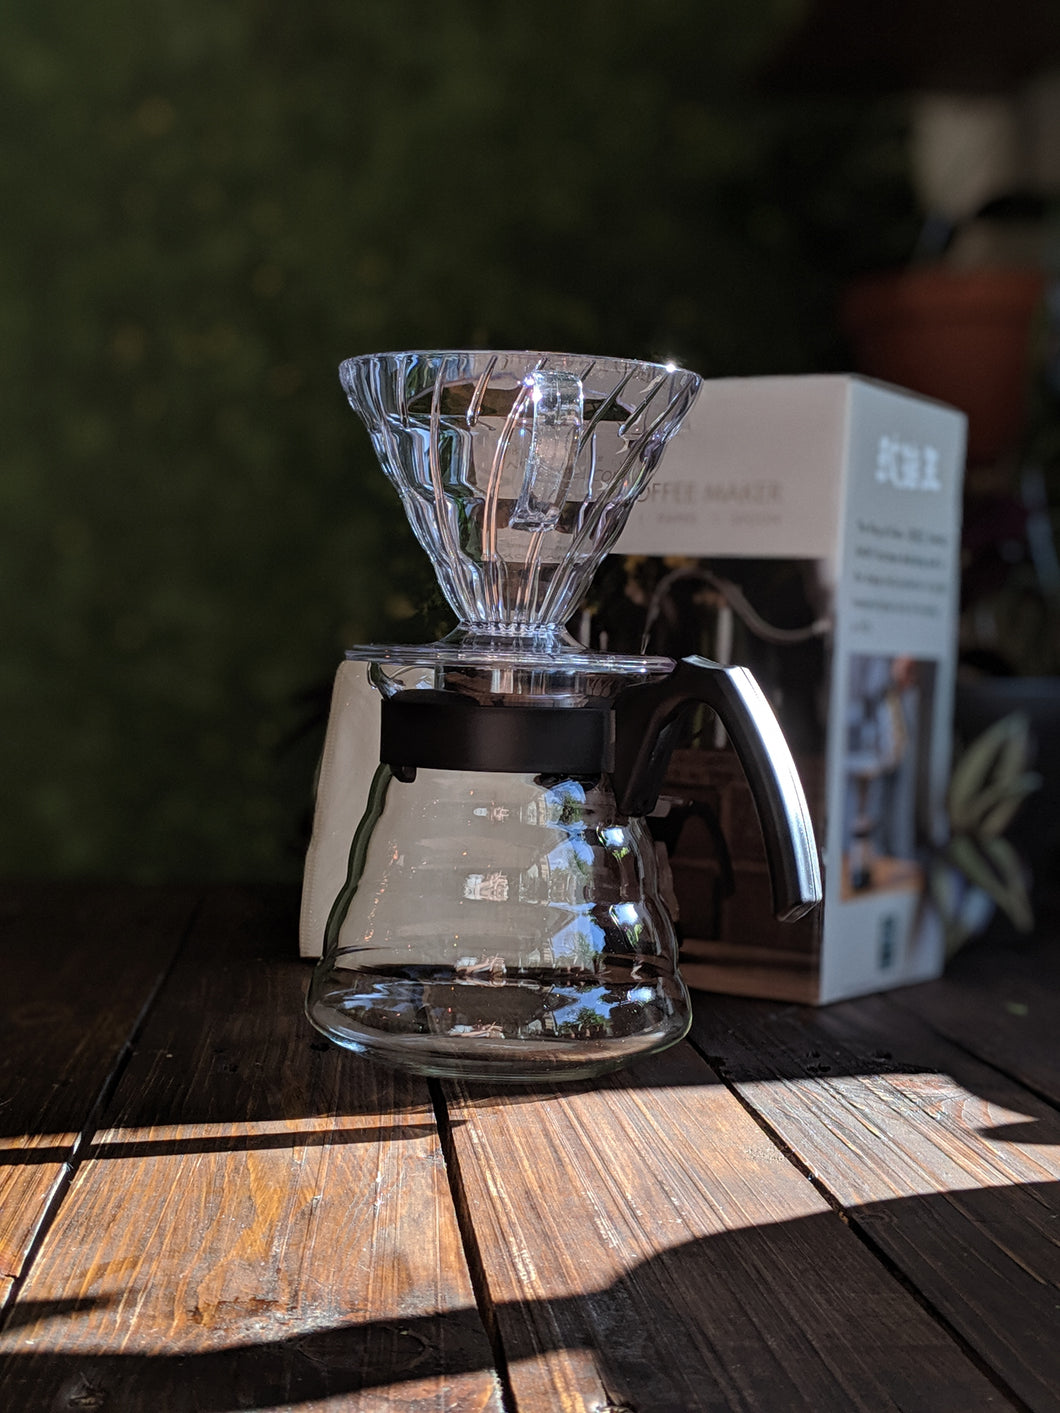 Hario V60 Coffee Maker Set